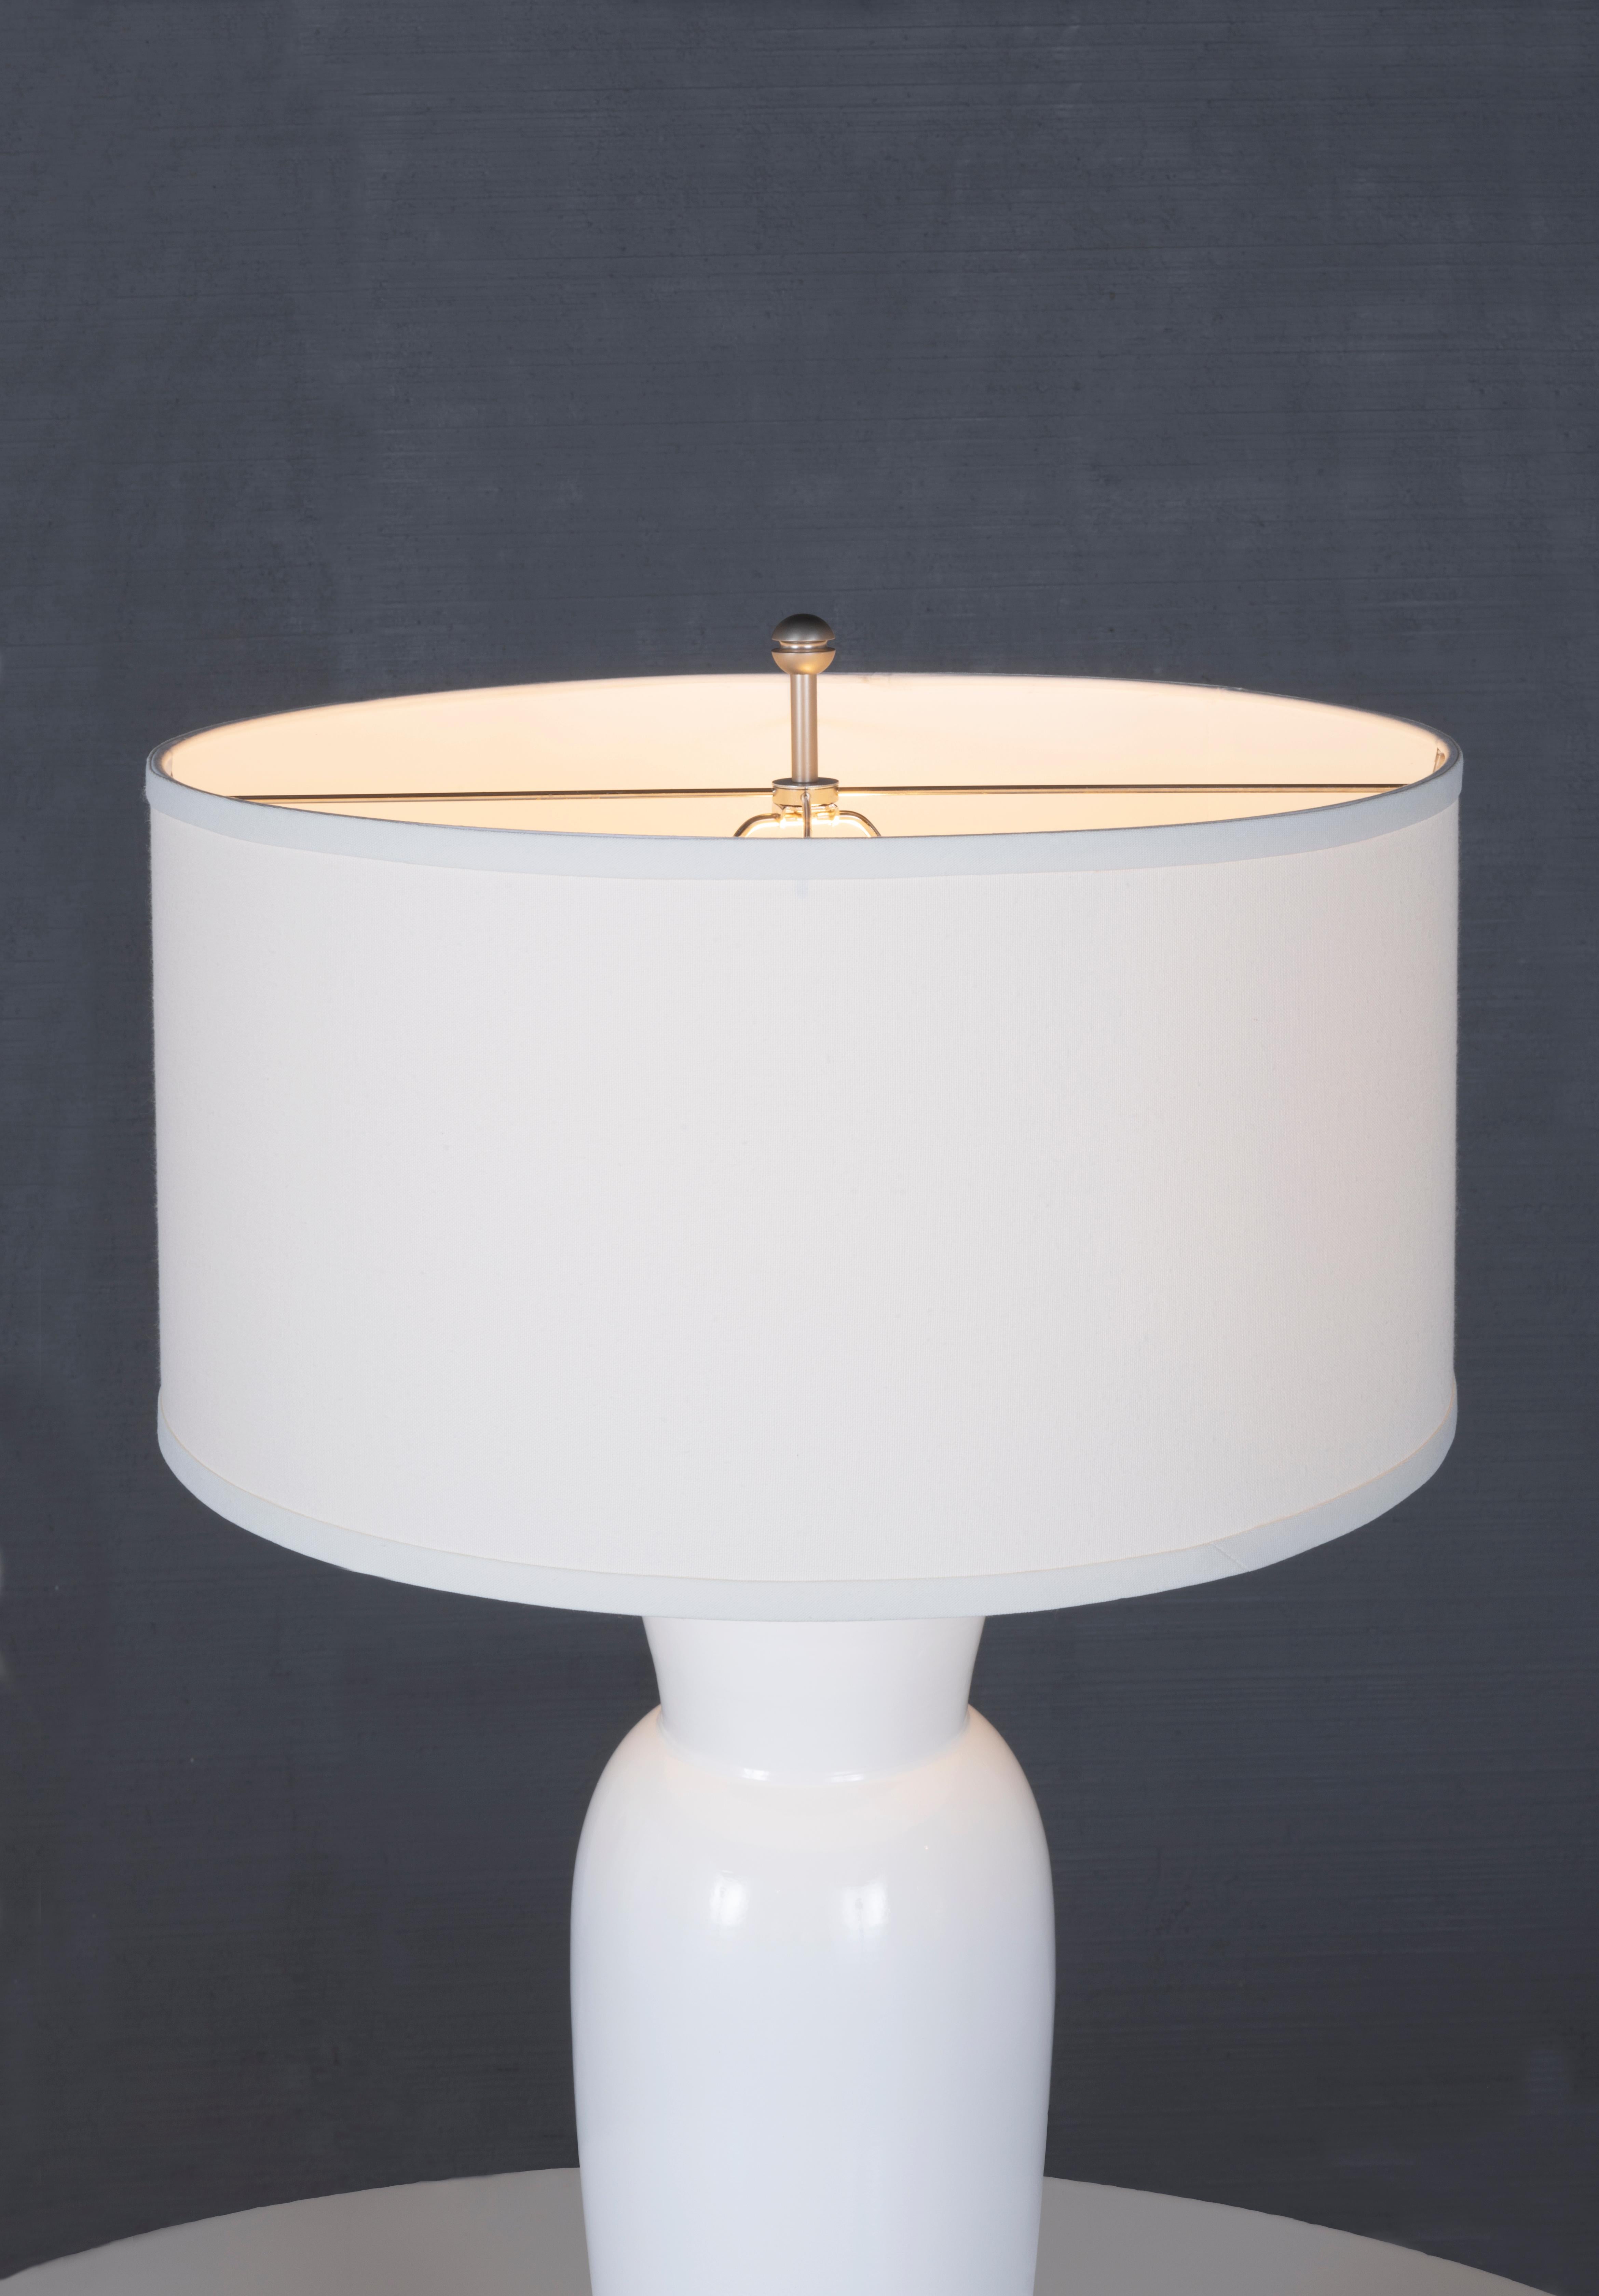 Modern RENG, Shiro Jar Form Ceramic Table Lamp with White Glazed to Matte Finish